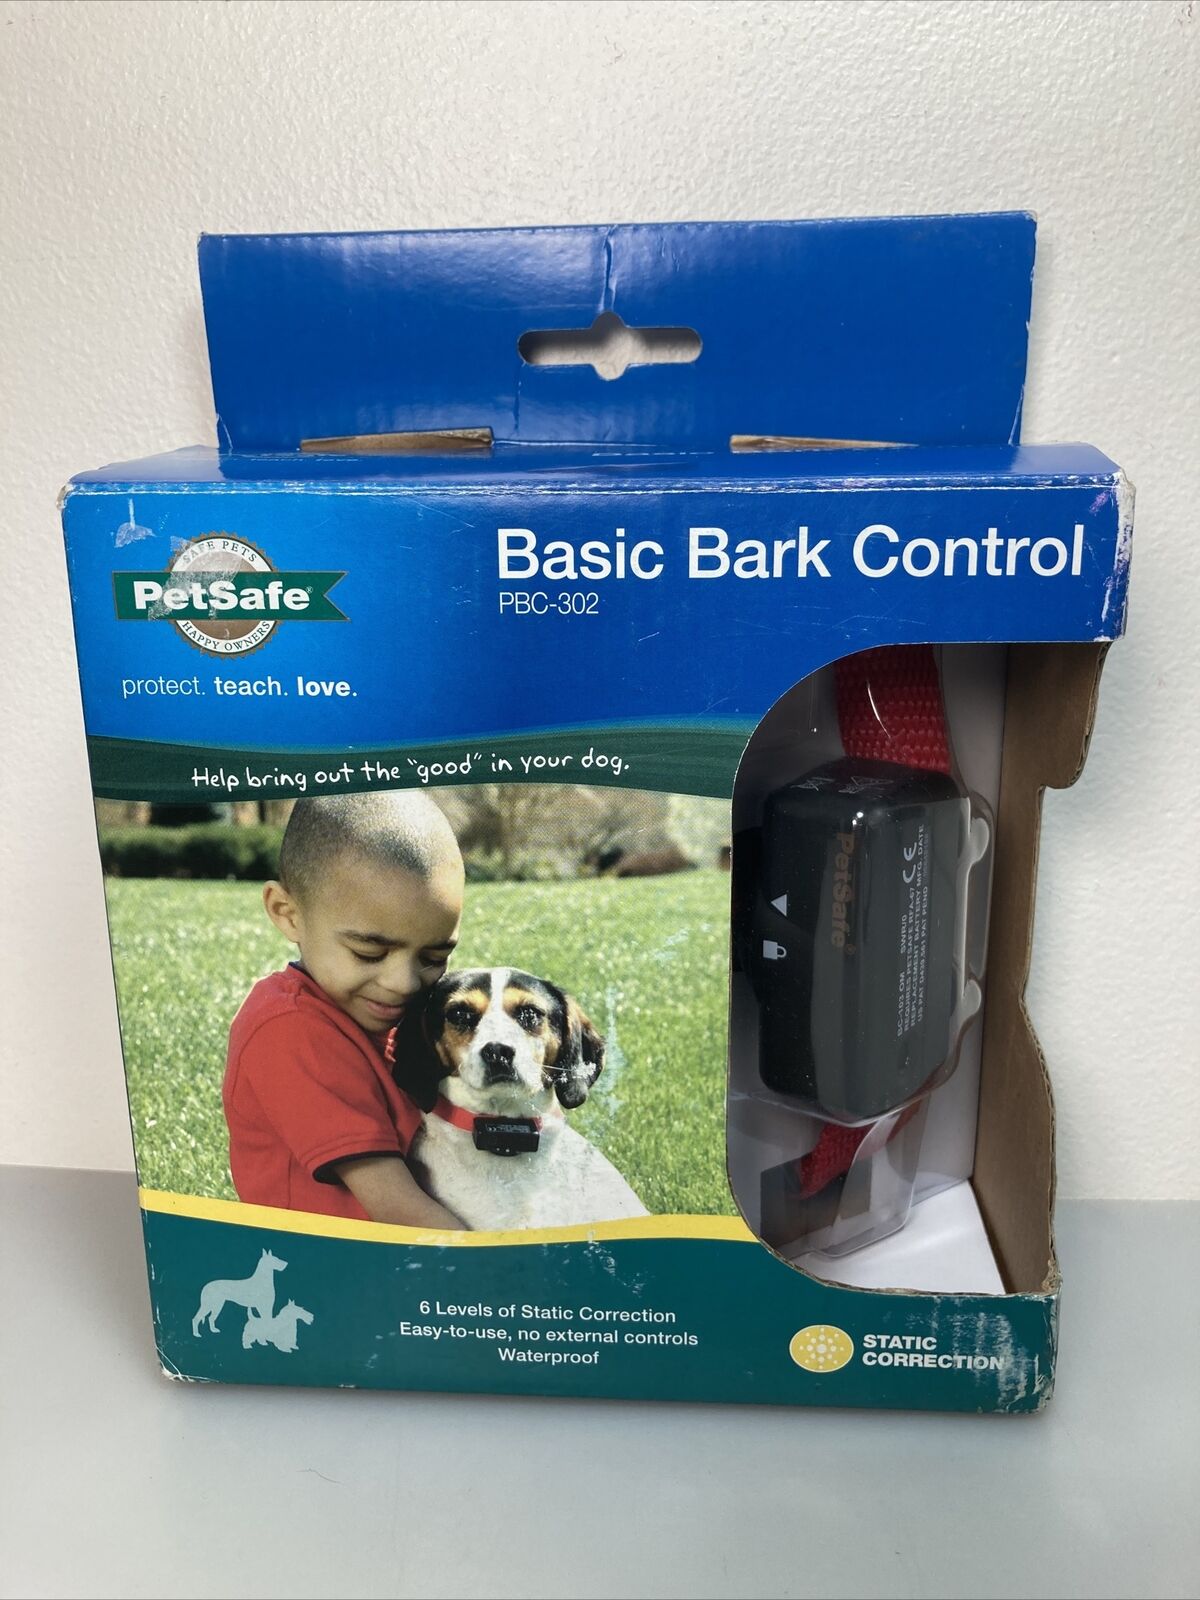 NEW PetSafe BASIC BARK CONTROL PBC-302 Static Correction Waterproof ~ New in Box